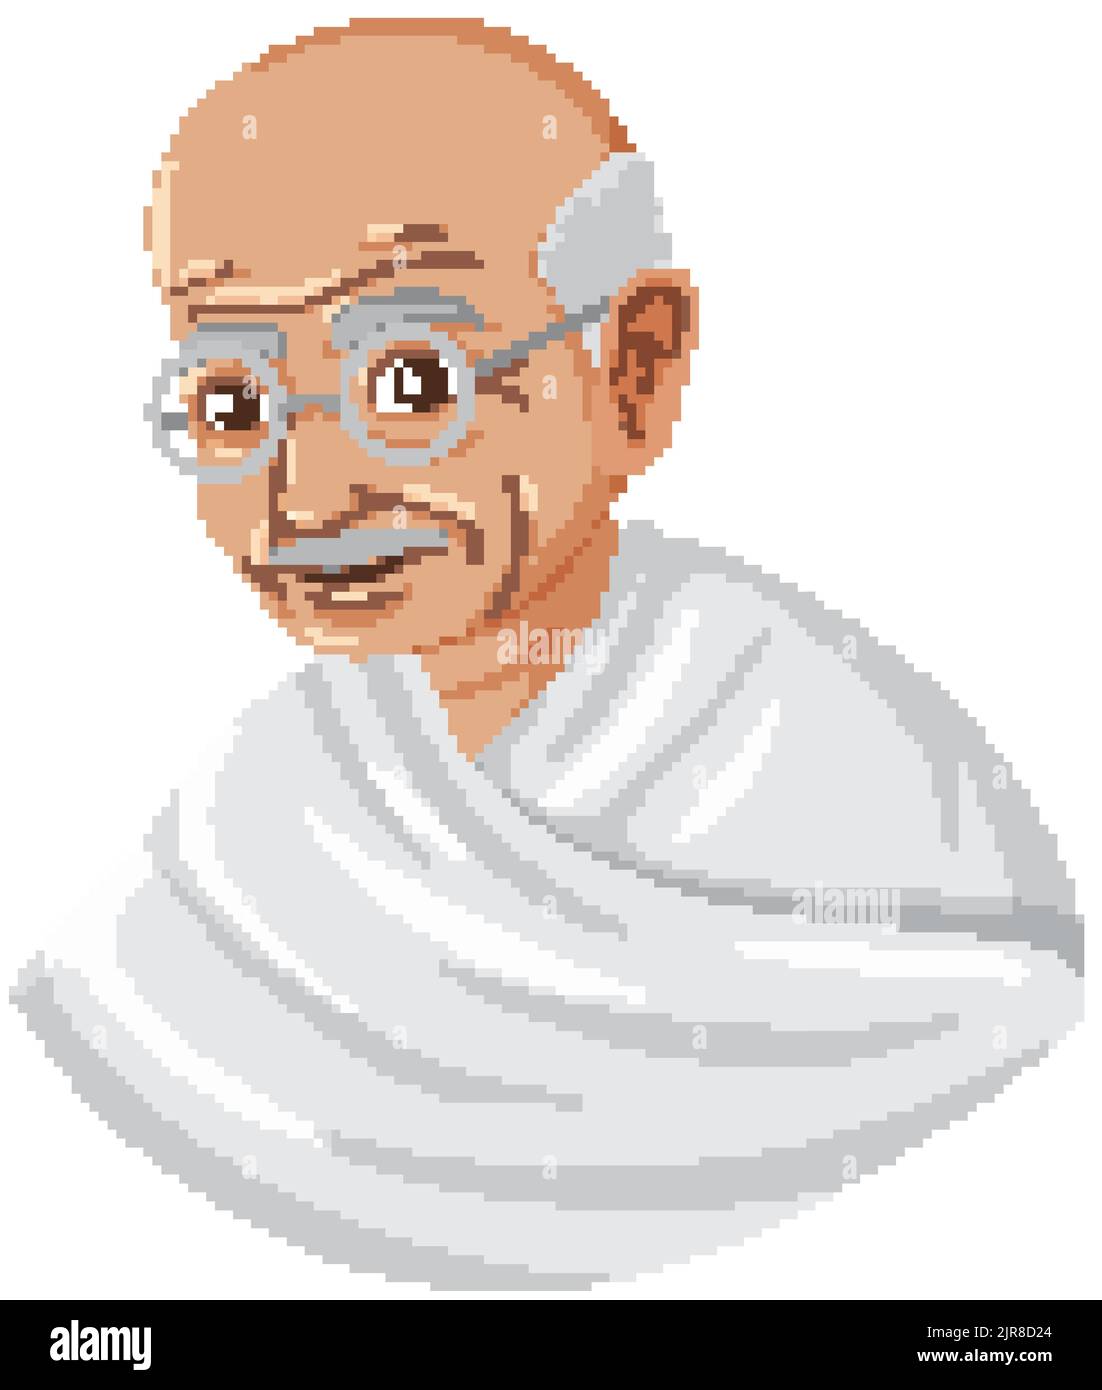 Mahatma gandhi cartoon hi-res stock photography and images - Alamy